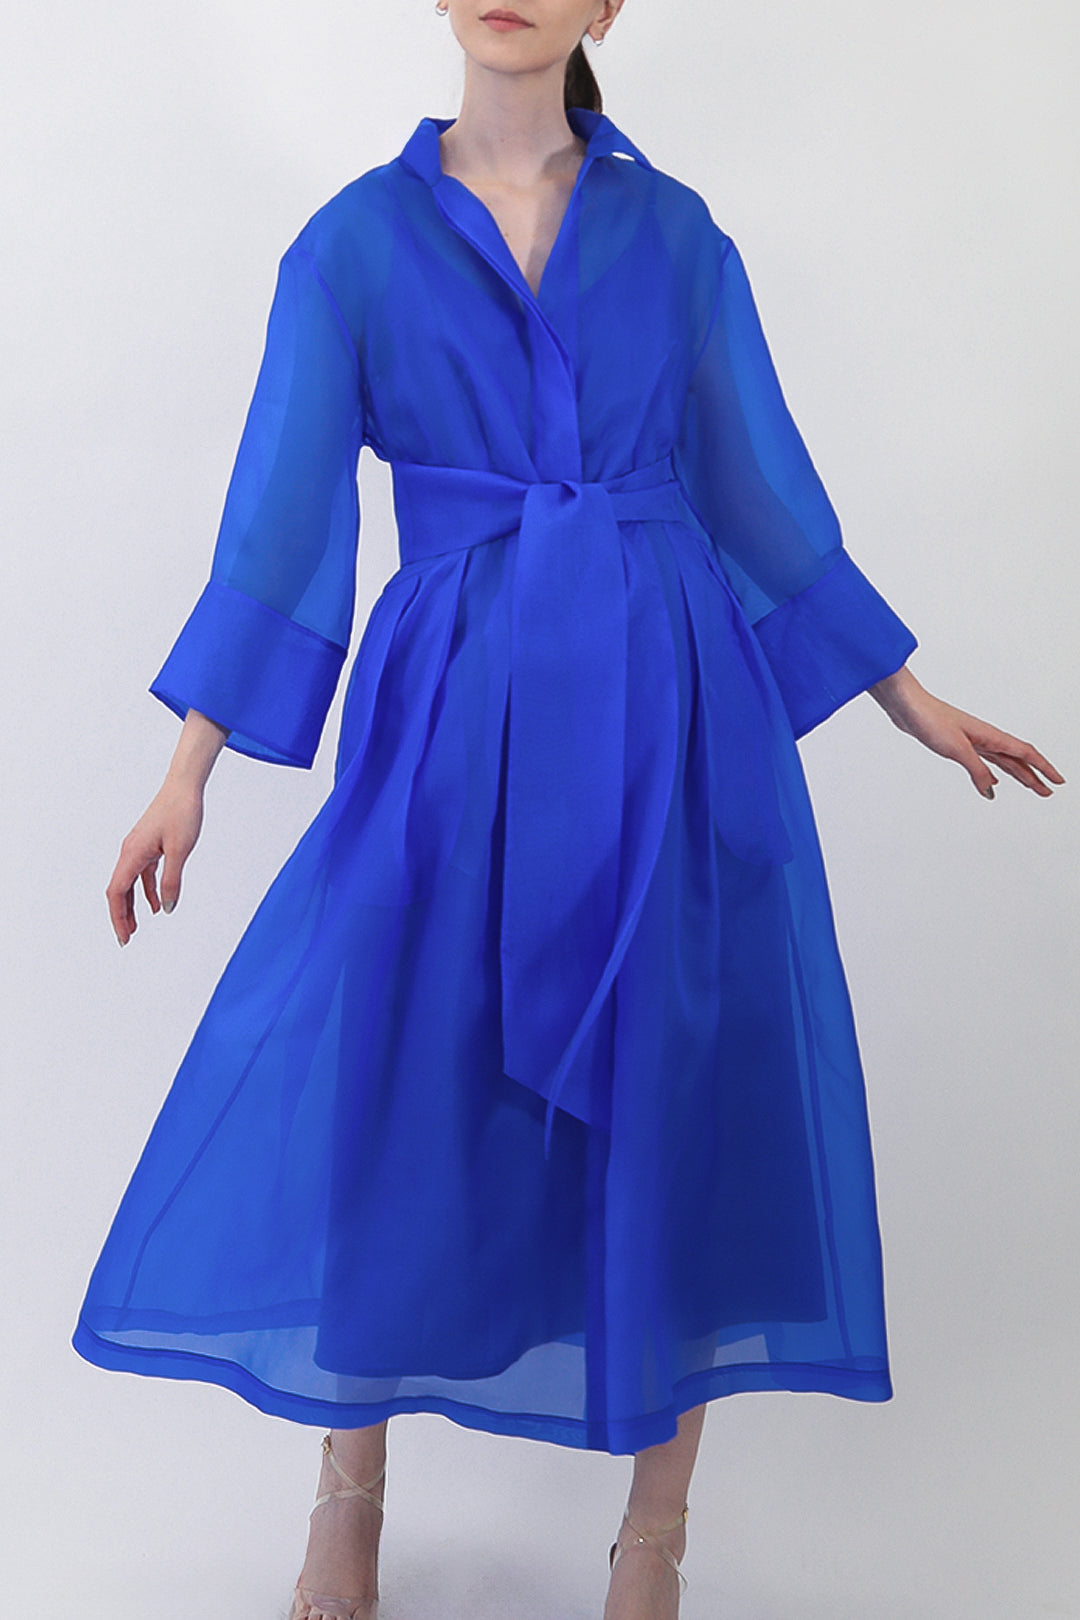 GABRIELLE DRESS IN SILK ORGANZA IMPERIAL BLUE